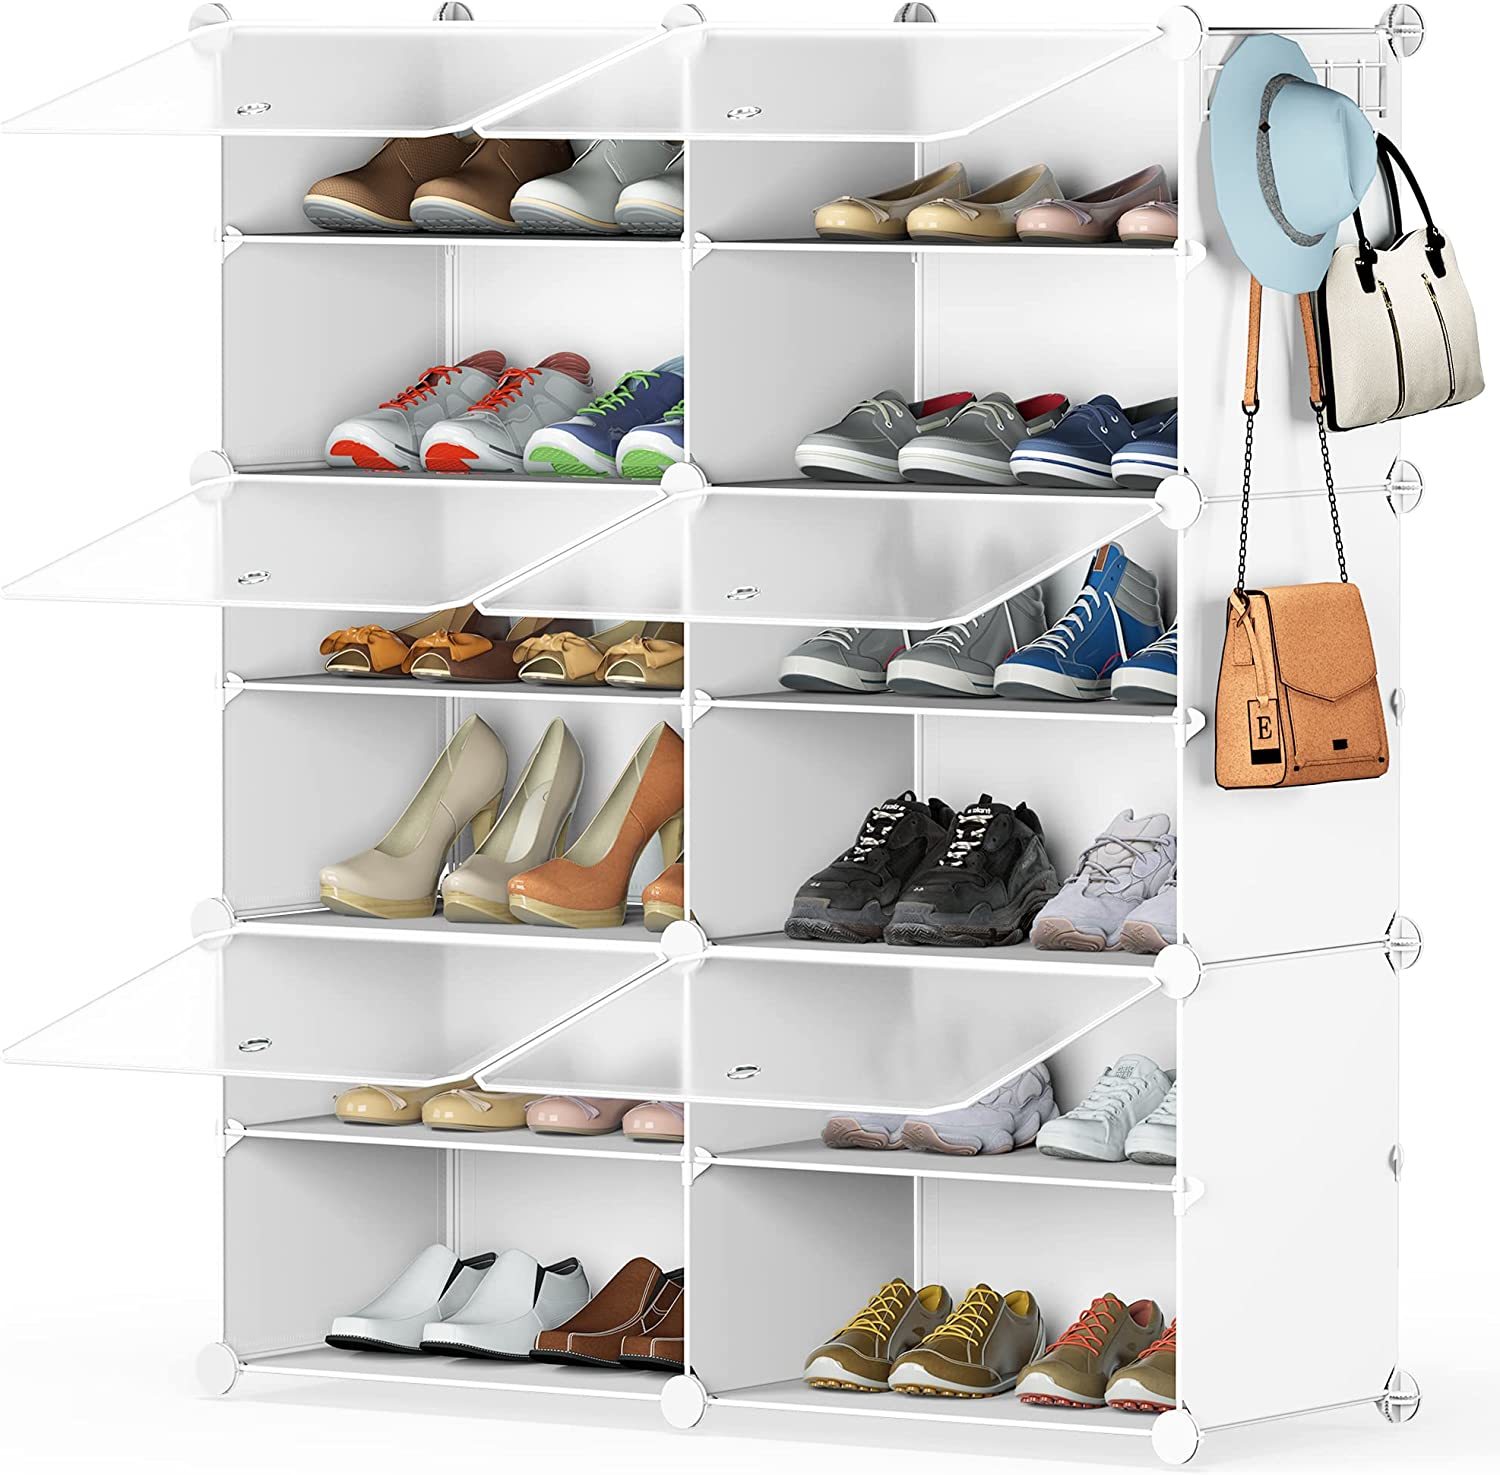 Primary image for Shoe Storage, 6-Tier Shoe Rack Organizer for Closet 24 Pair Shoes Shelf Cabinet